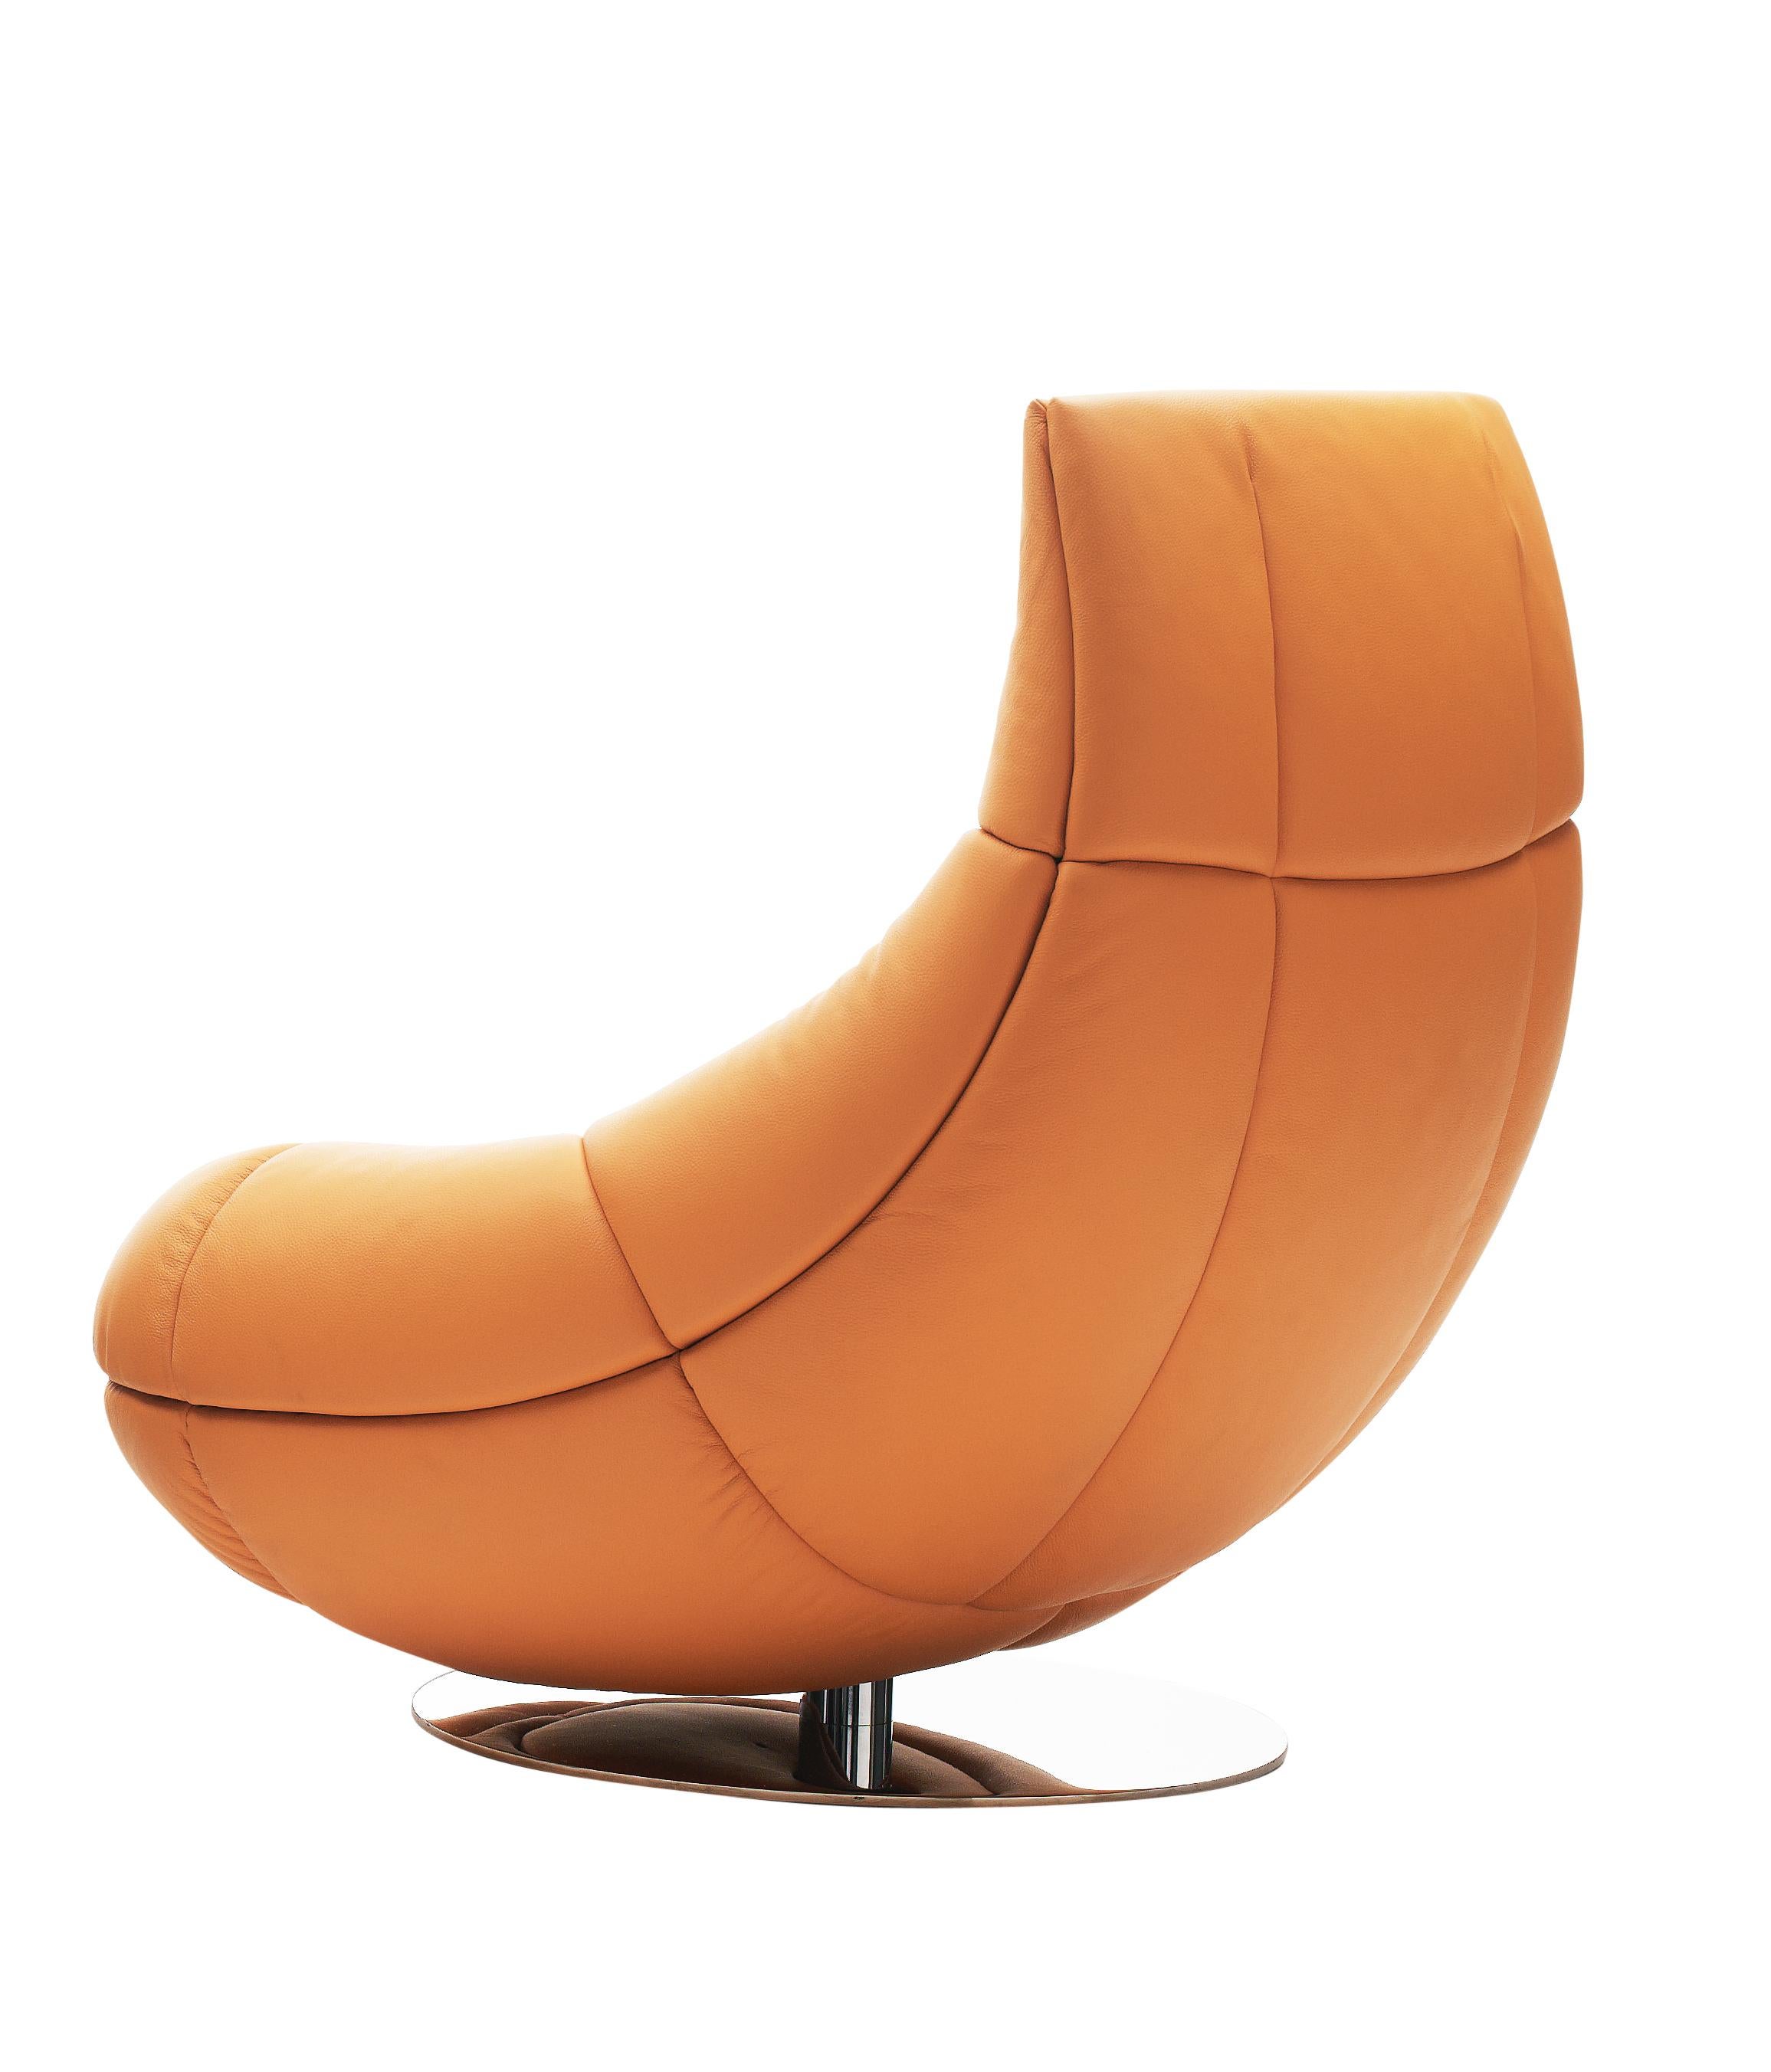 Orange (Teak) De Sede Swivel Lounge Chair by Hugo de Ruite